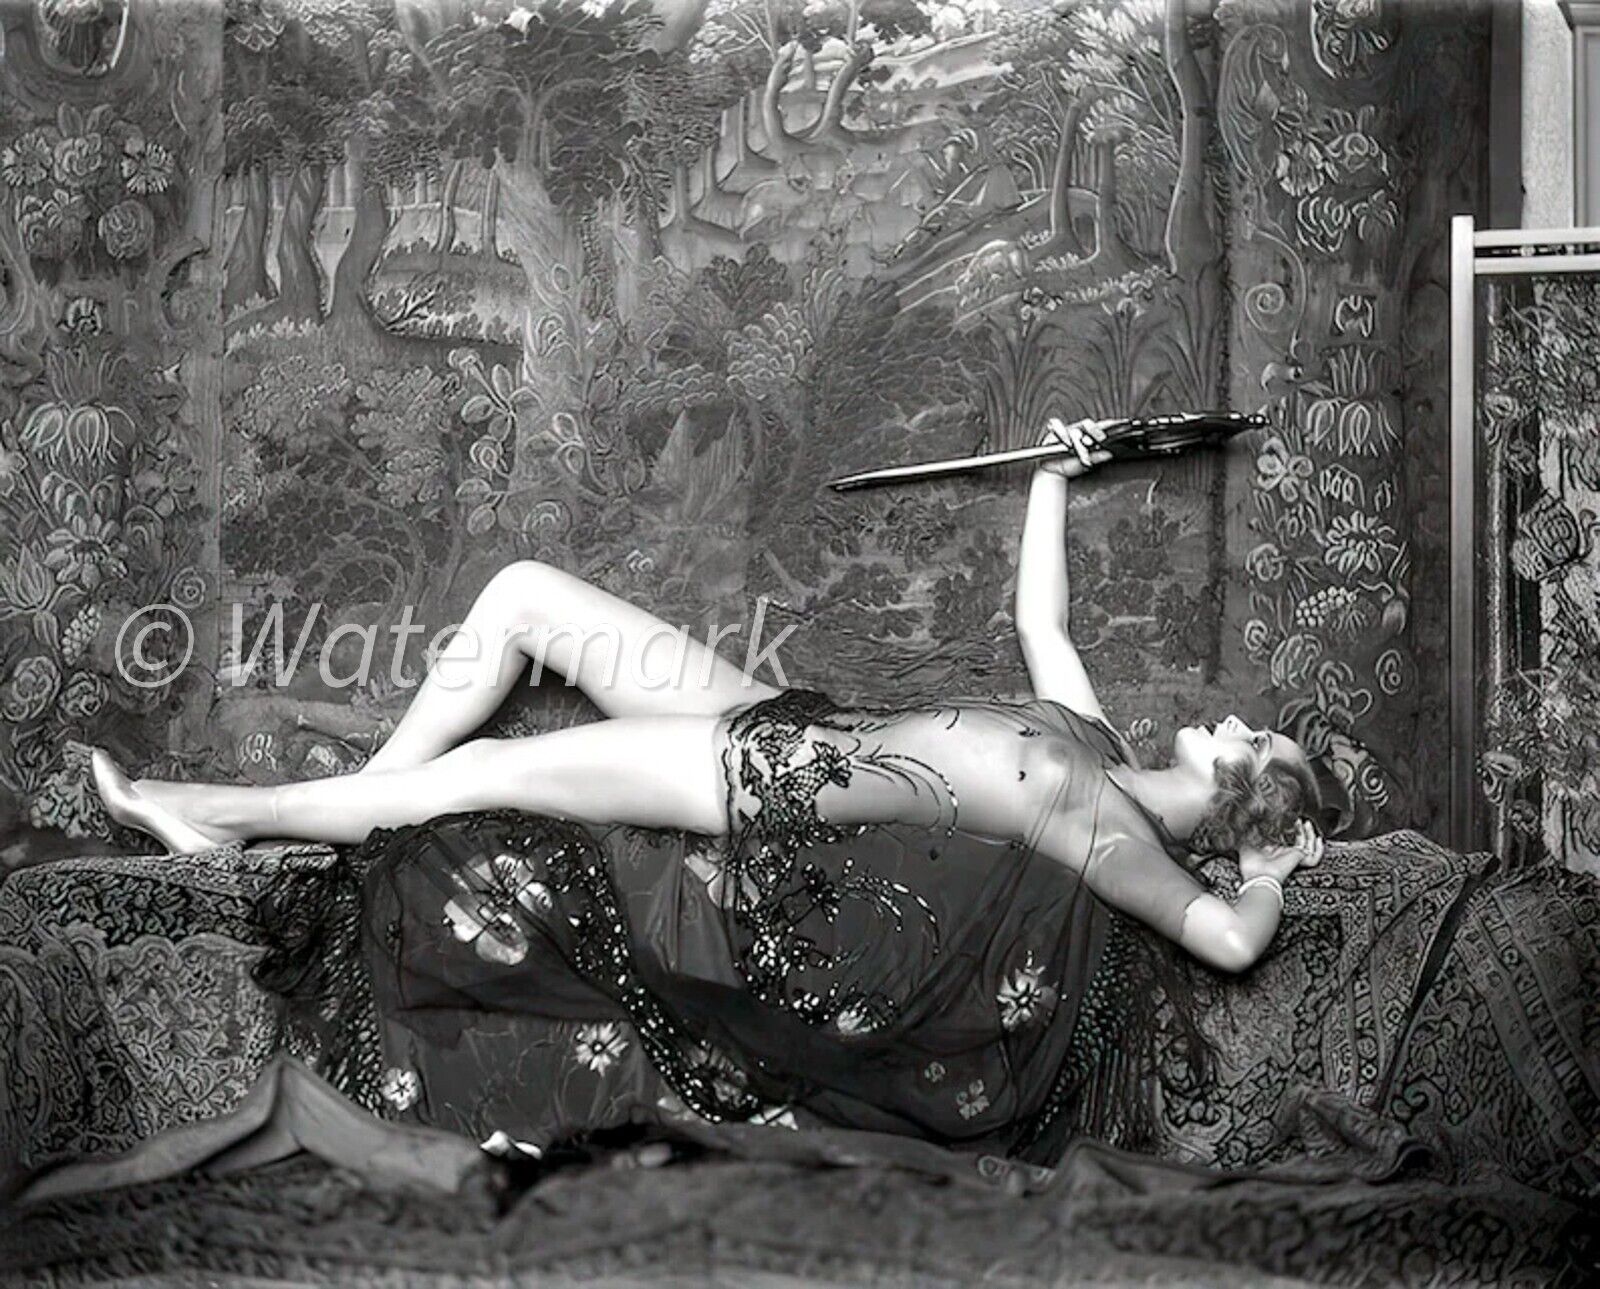 Flapper Girl - Ziegfeld Follies 8X10 PUBLICITY PHOTO Vintage 1920s glamour